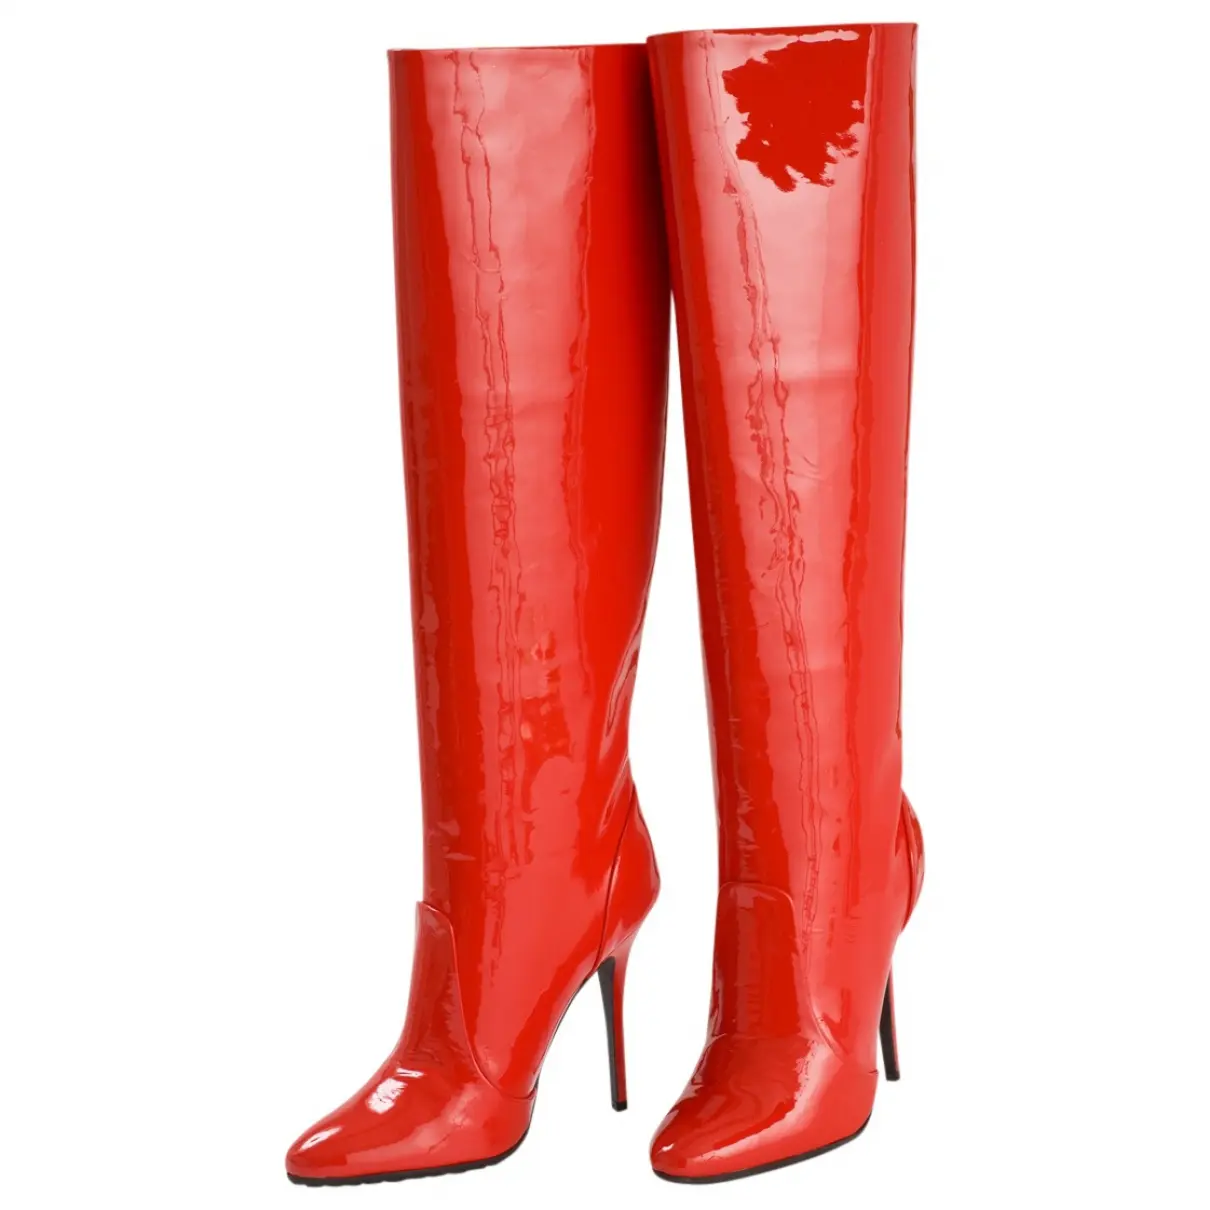 Red Patent leather Boots Giuseppe Zanotti